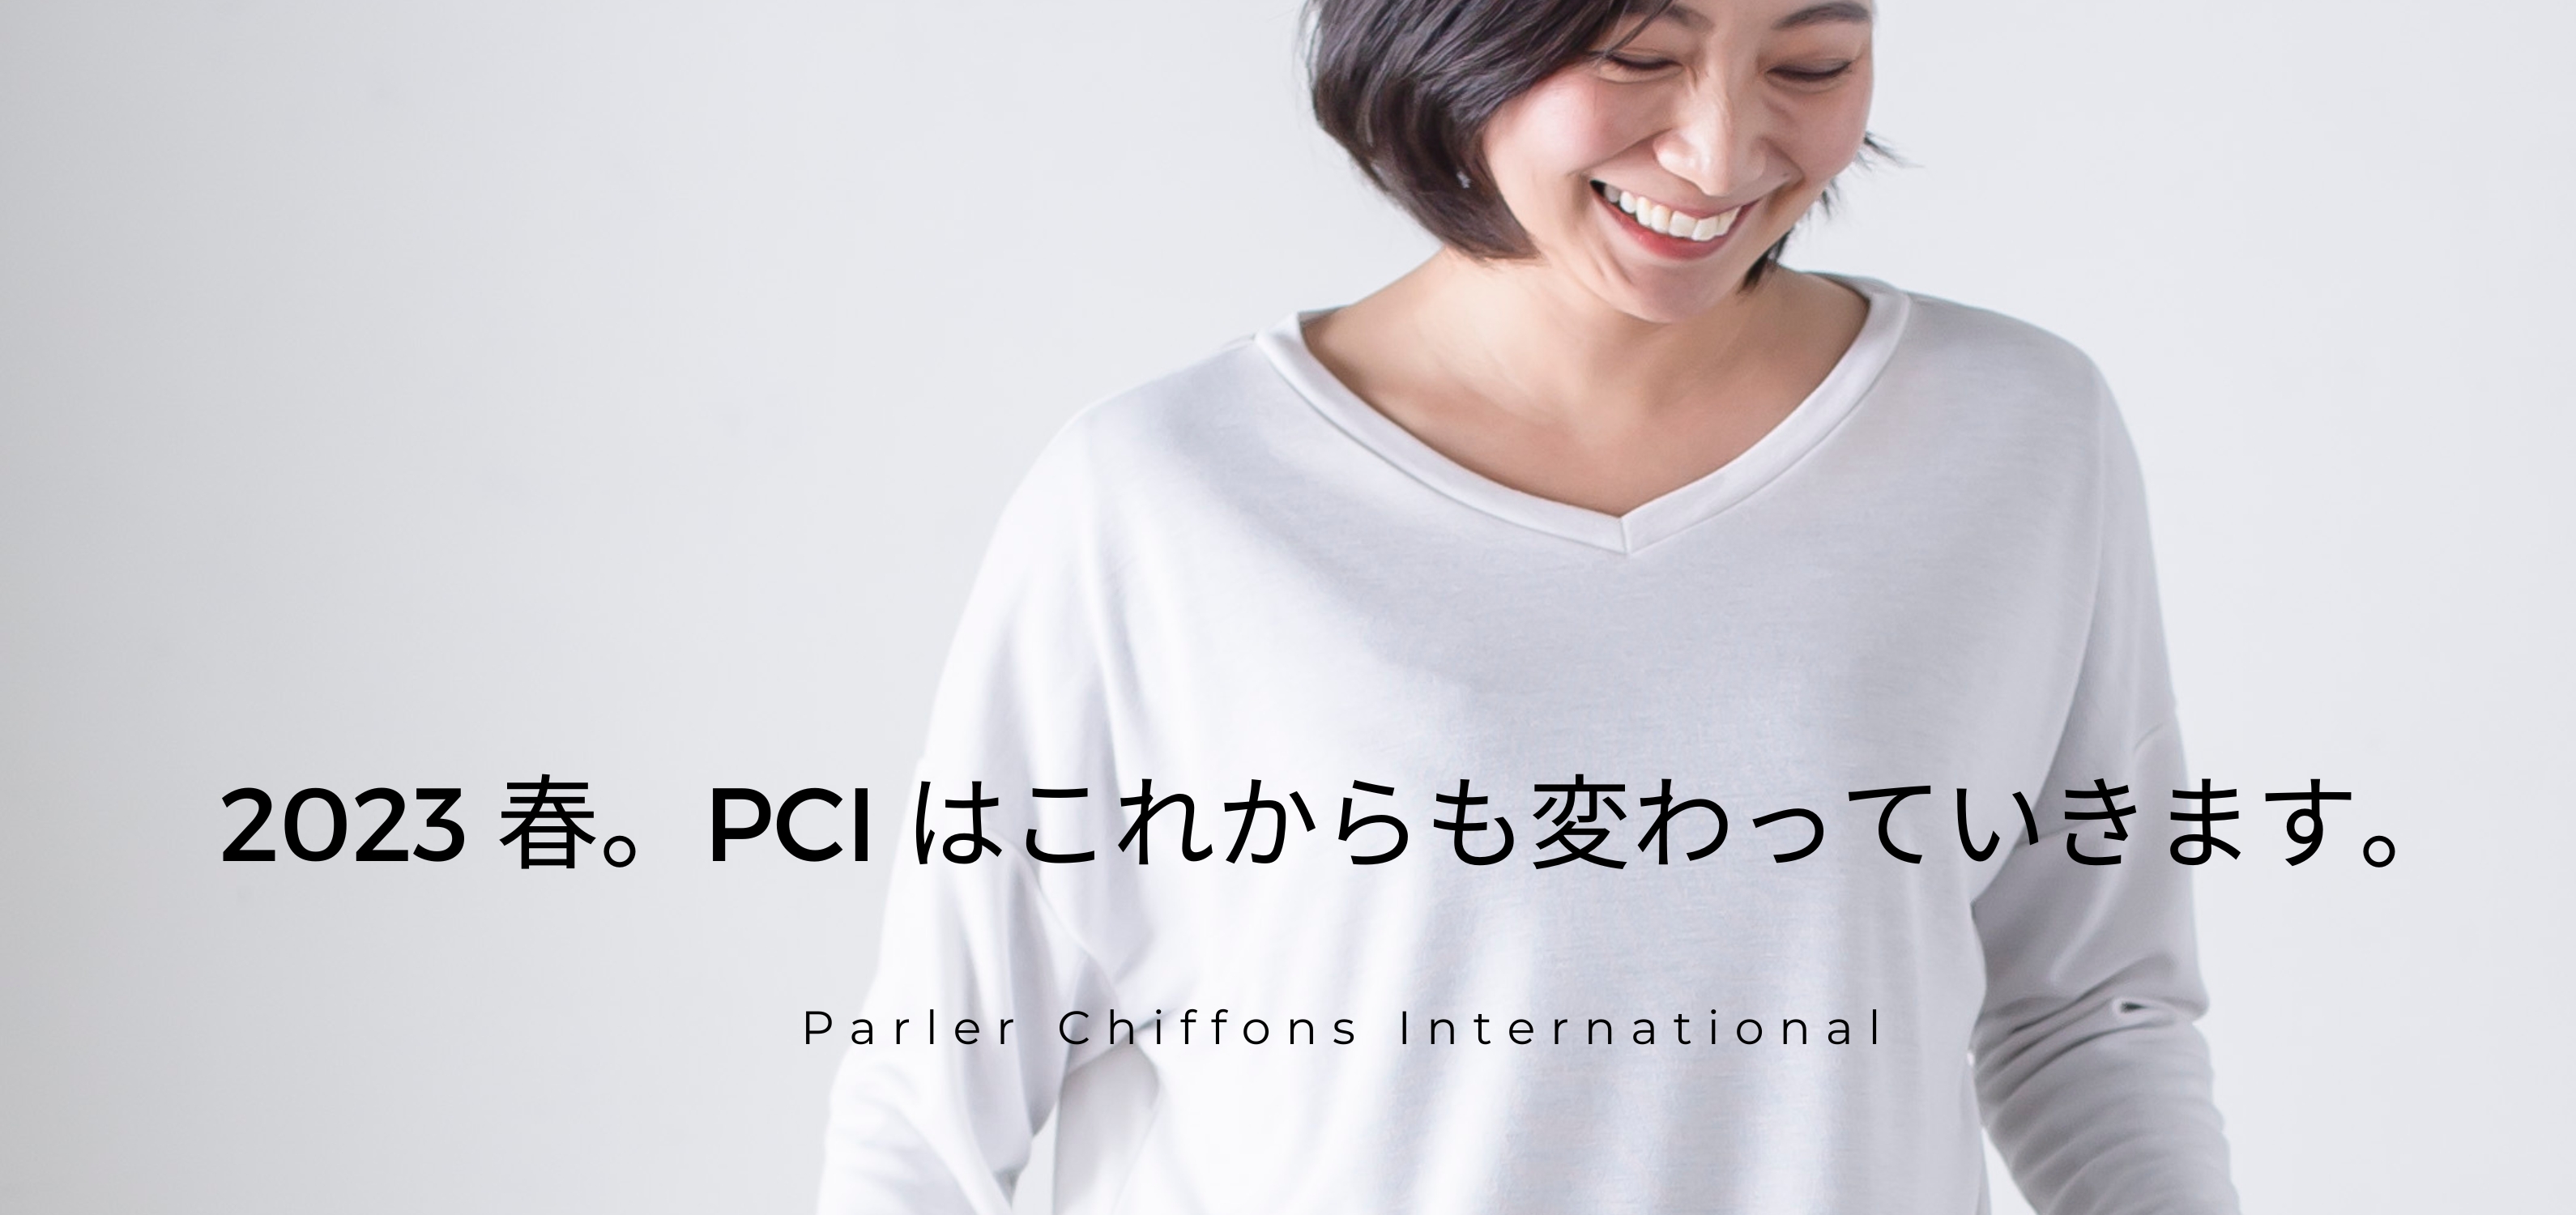 Parler Chiffons International | シンプルだけど、ちょっとおしゃれな服。